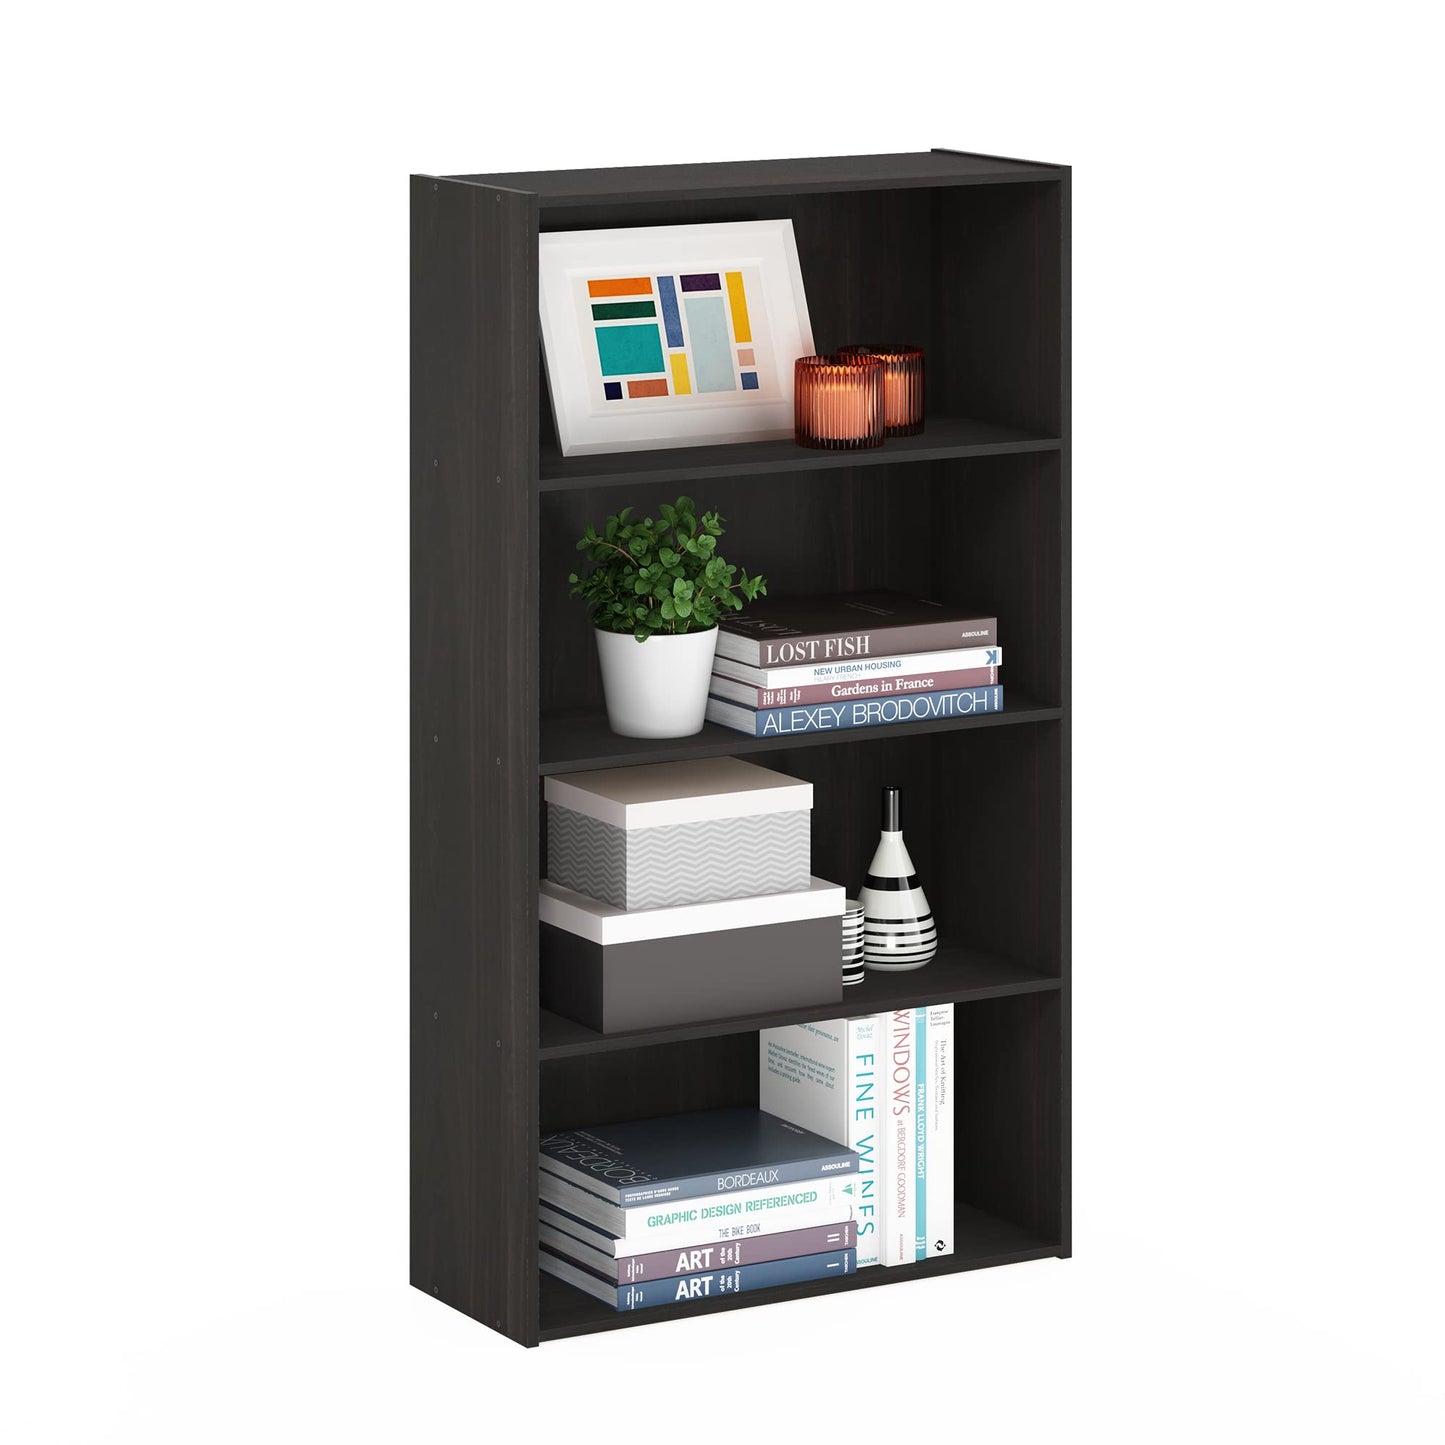 Furinno Pasir 4-Tier Bookcase / Bookshelf / Storage Shelves, Espresso